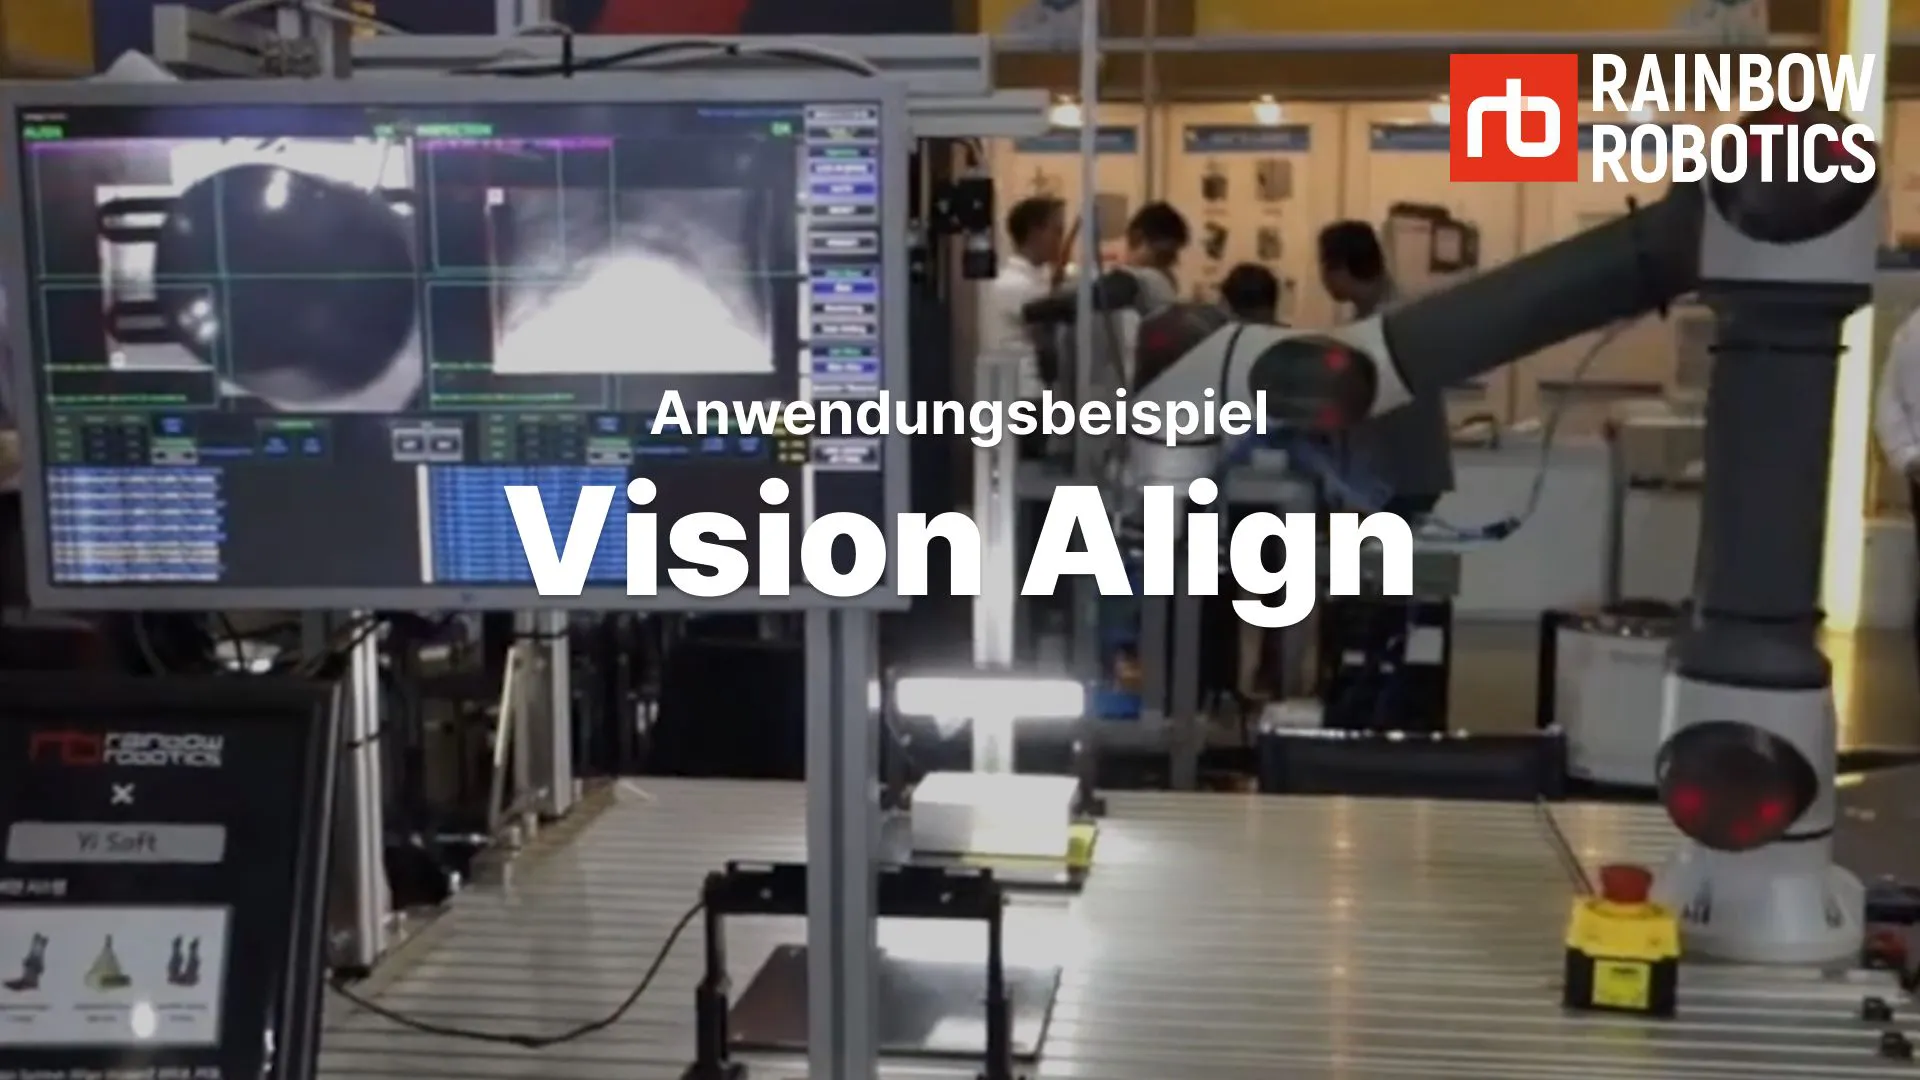 Thumbnail of Vision Align example application of Rainbow Robotics Cobots